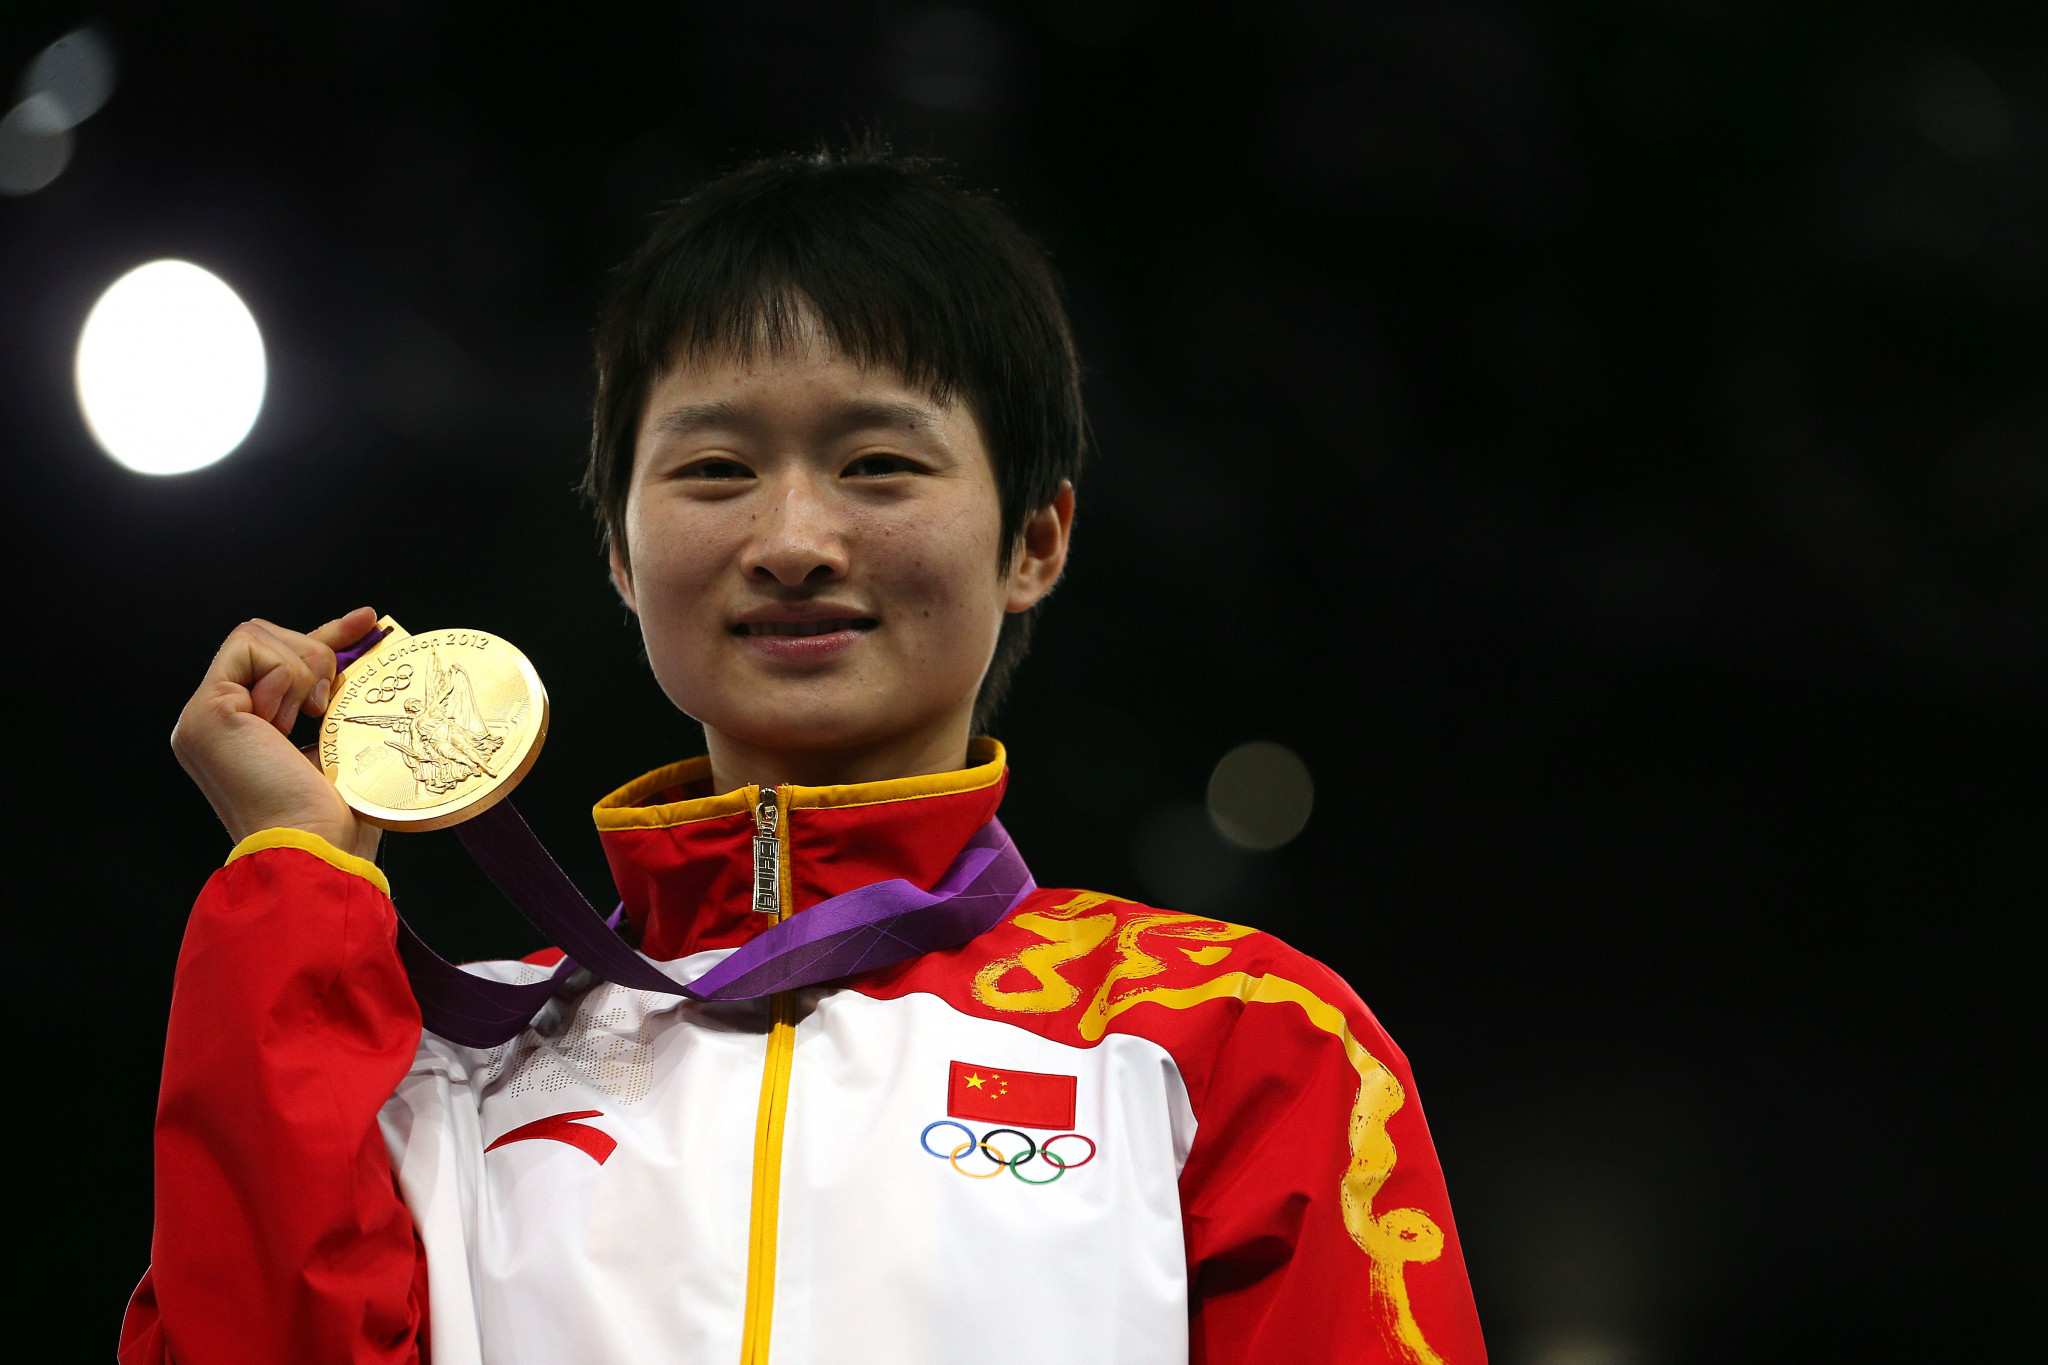 Wu Jingyu is set to serve as chair of the World Taekwondo Athletes' Commission alongside Cheick Cissé ©Getty Images